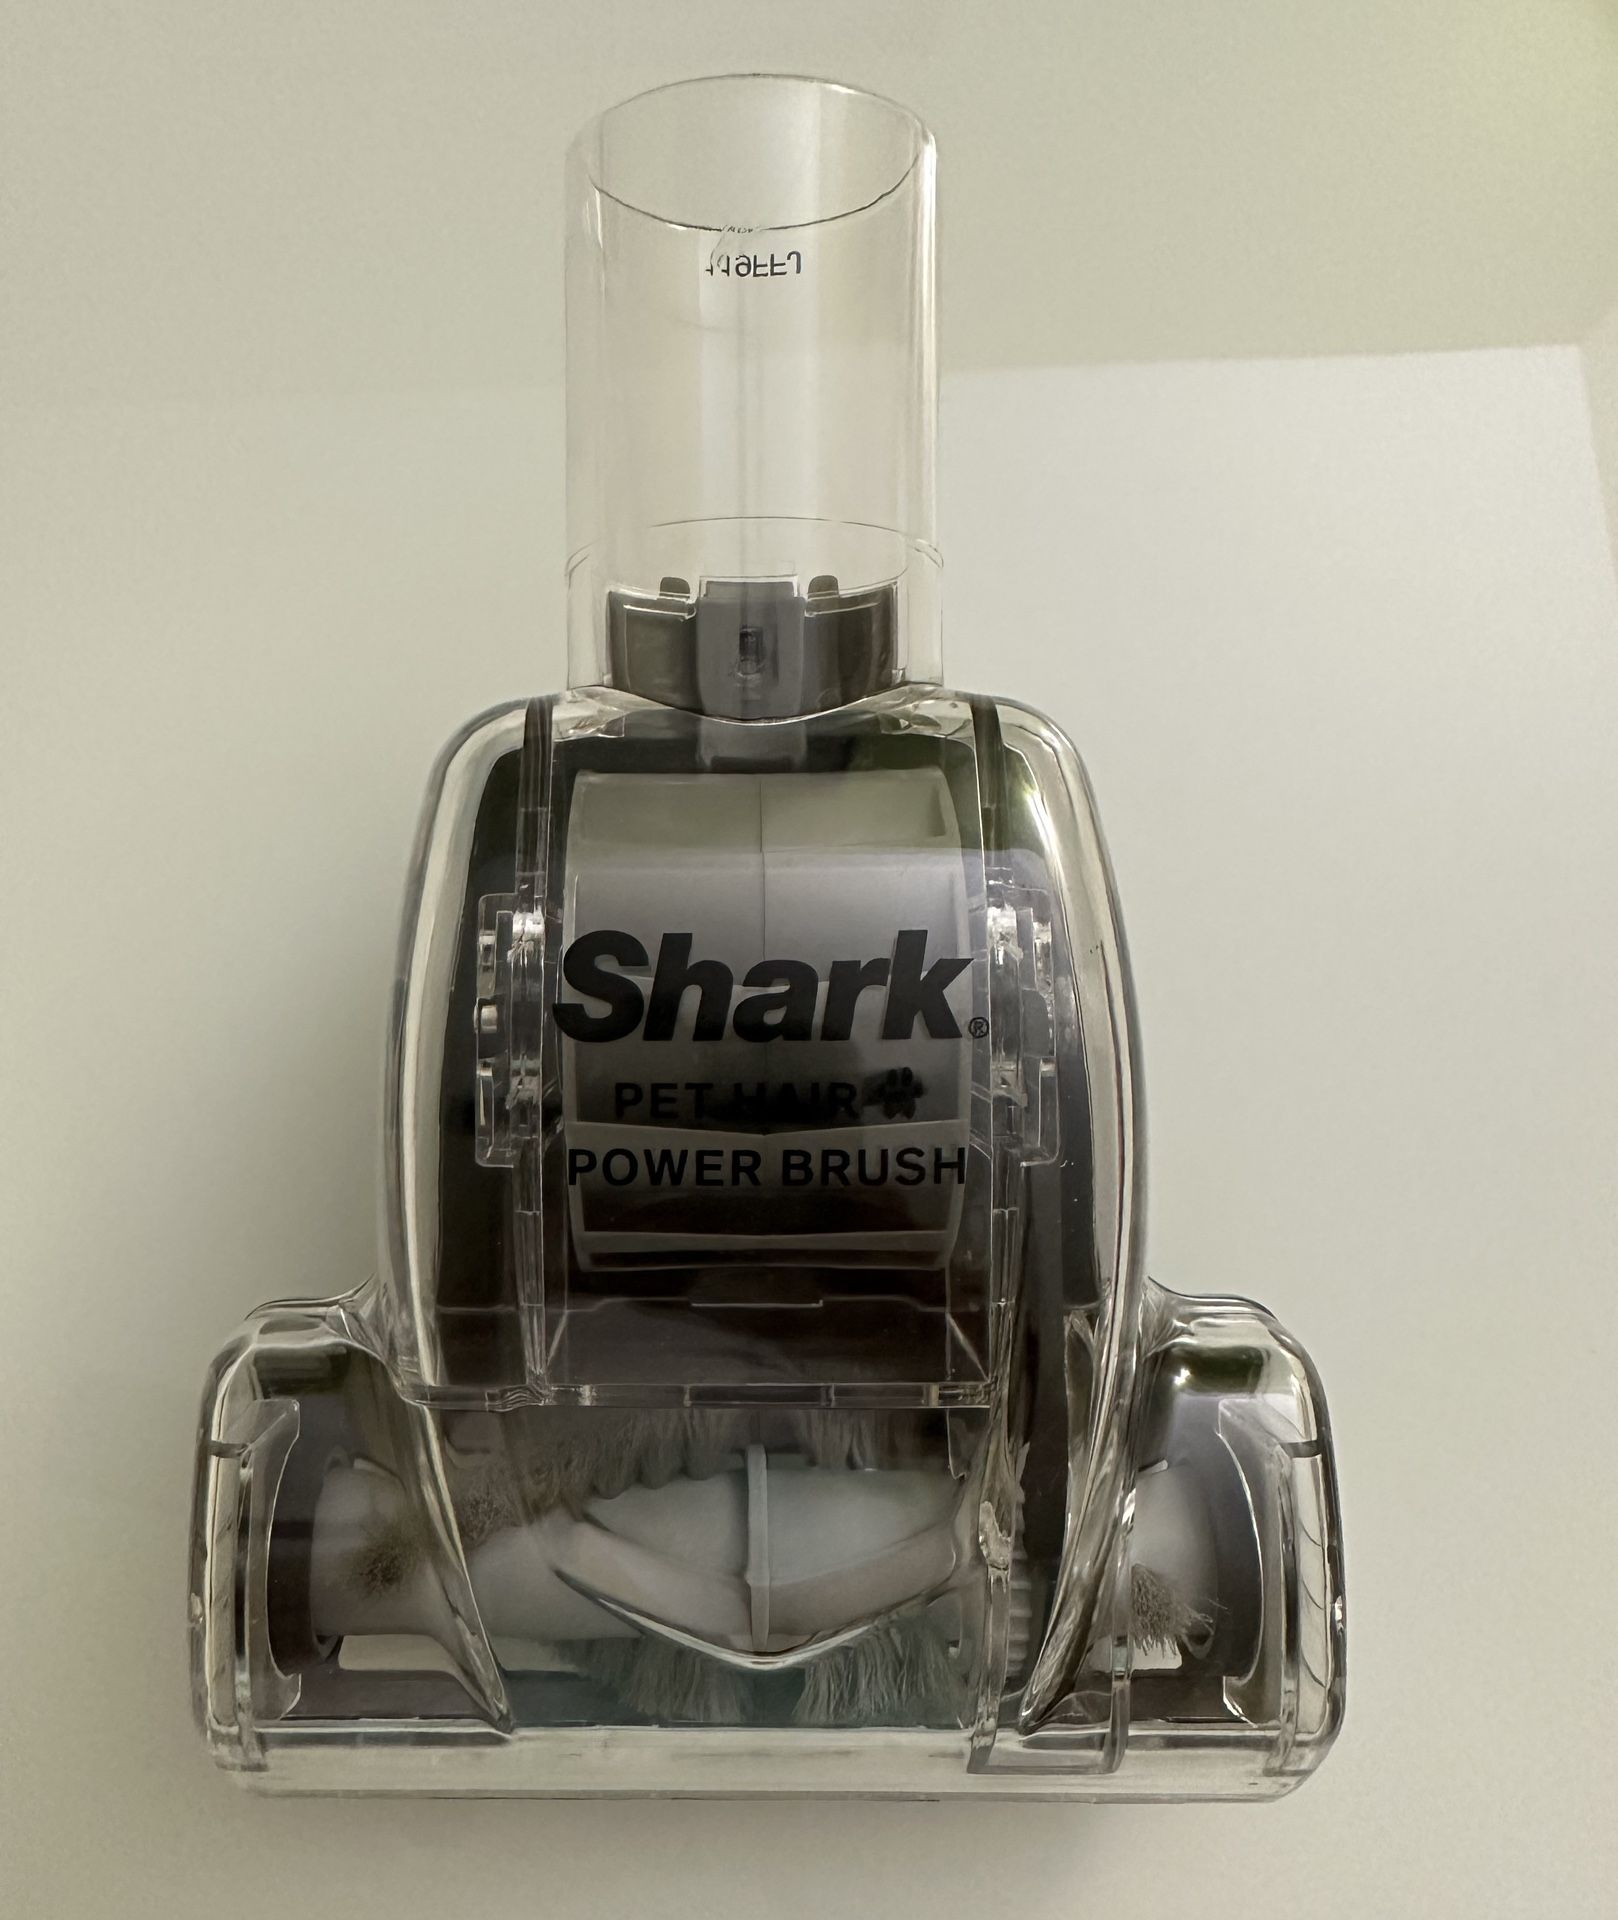 Tool Attachment Shark Pet Hair Power Brush.